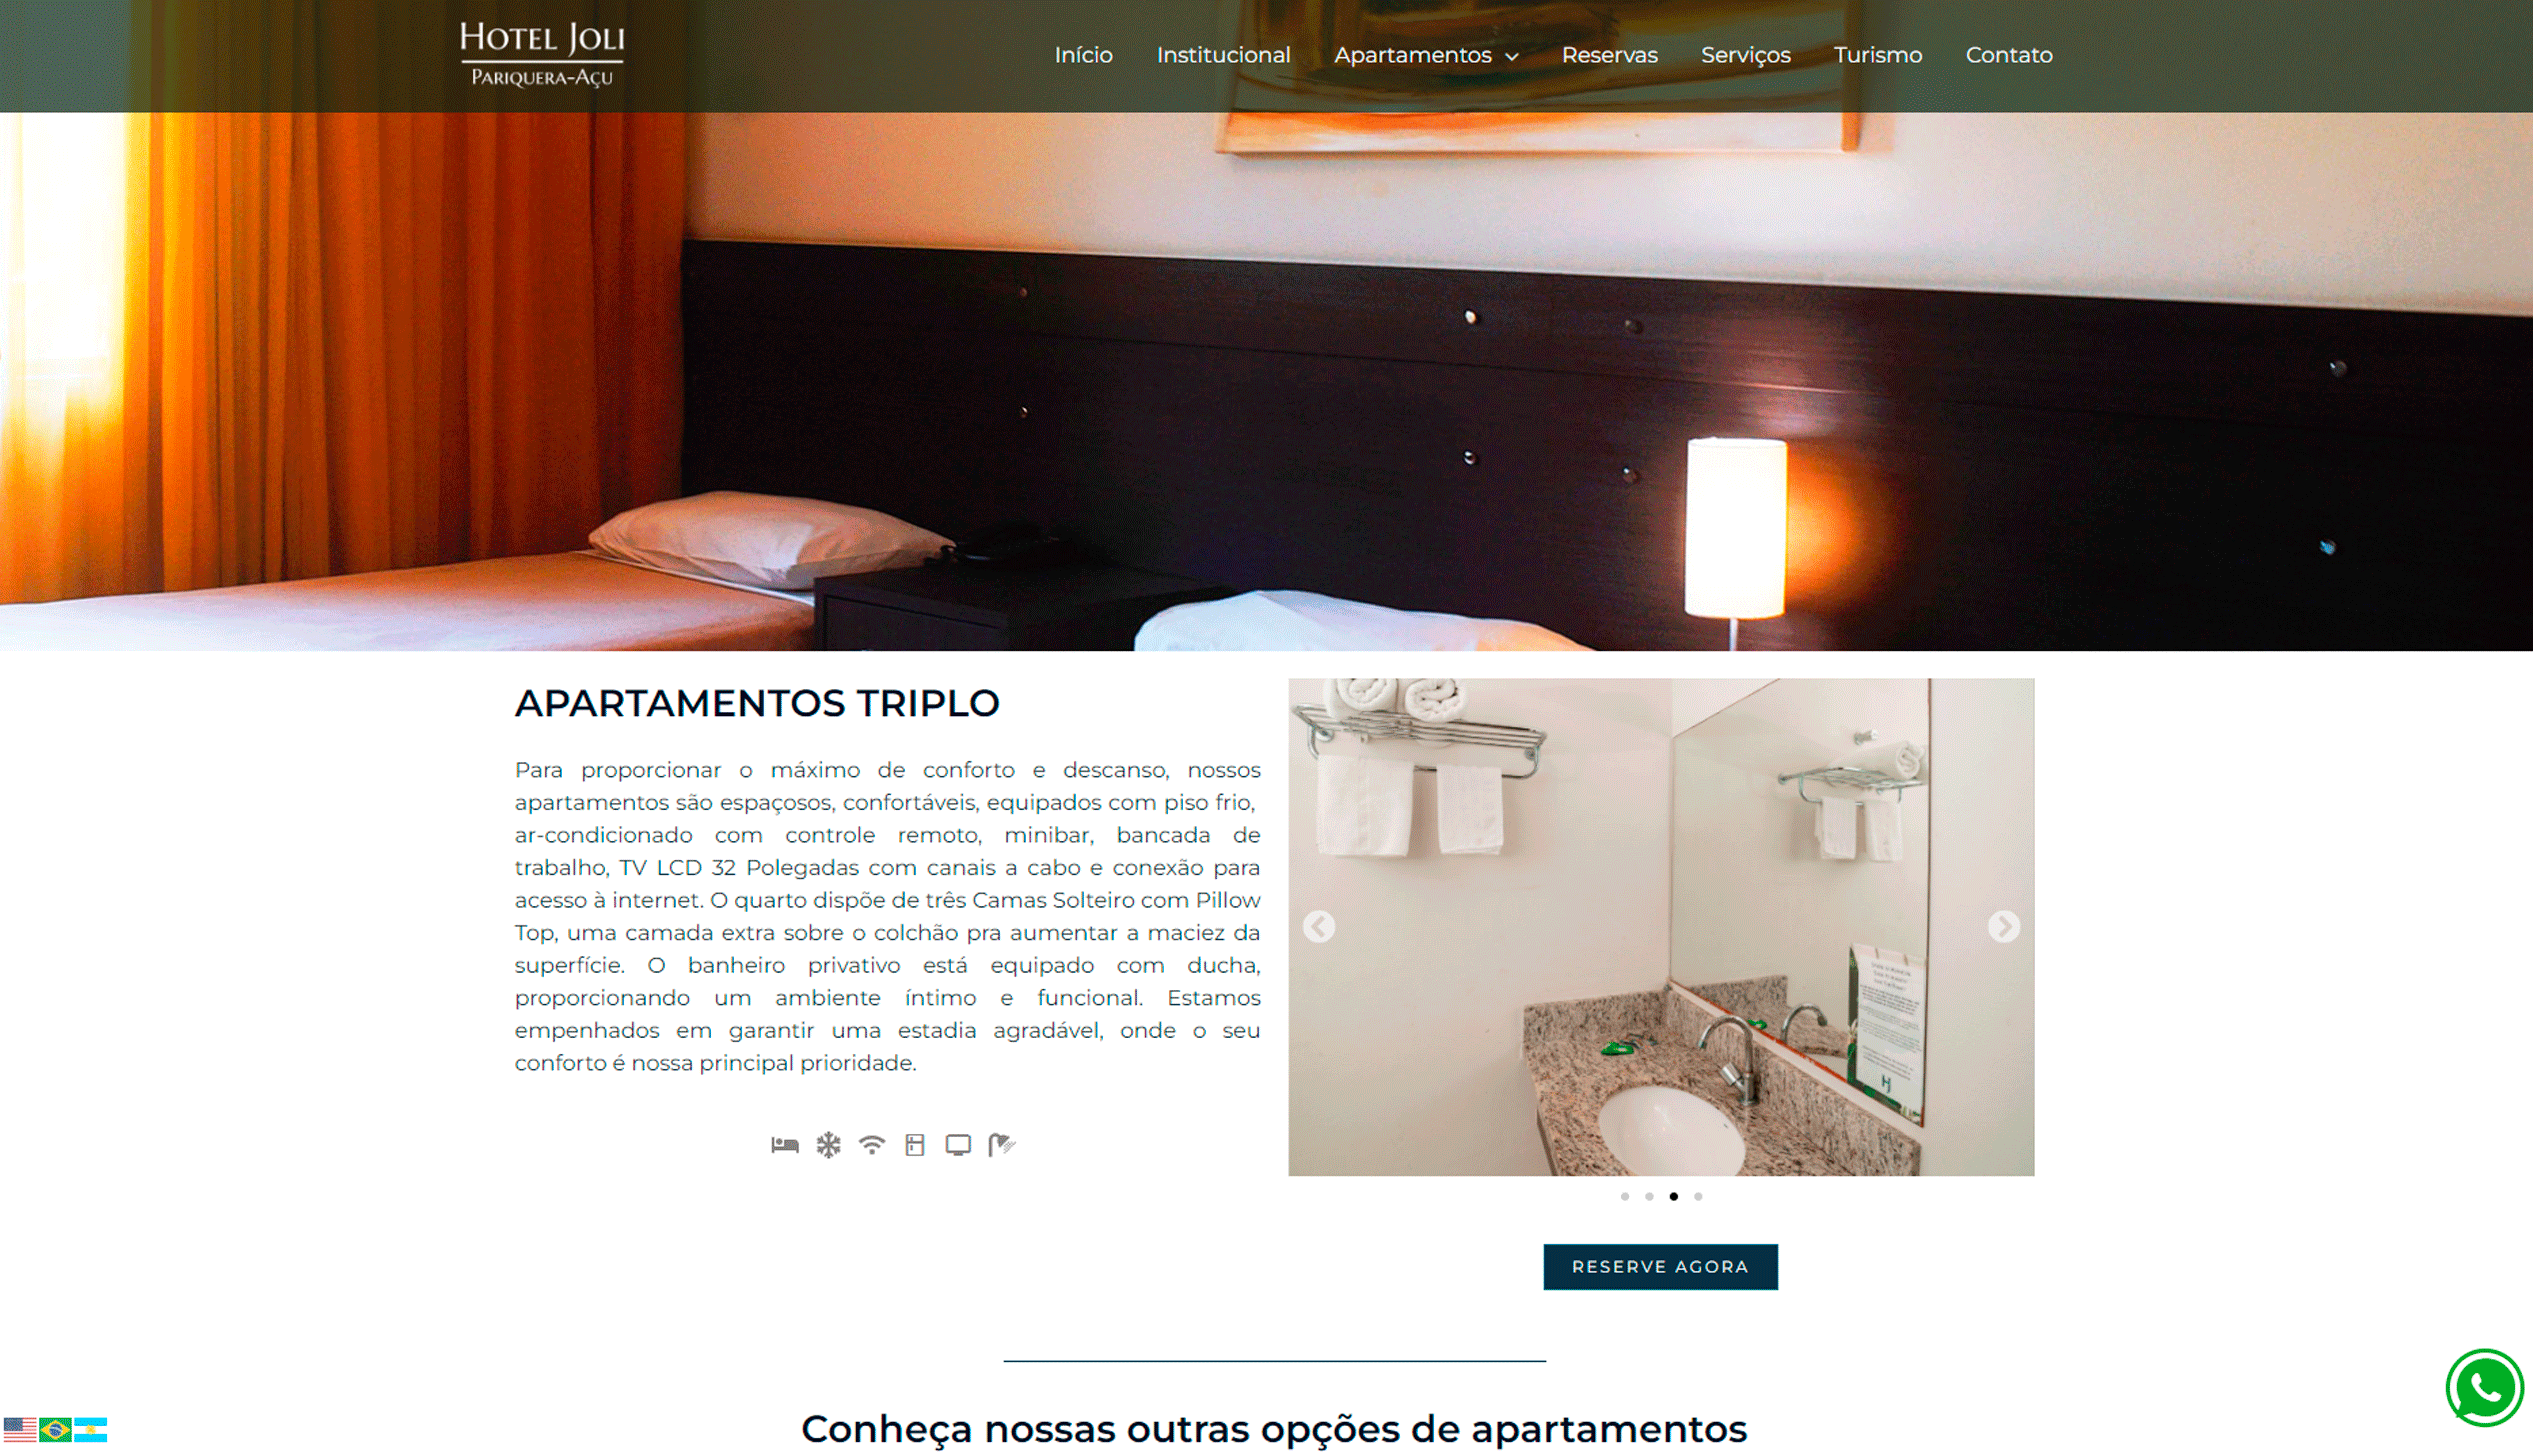 website-hotel-joli-1